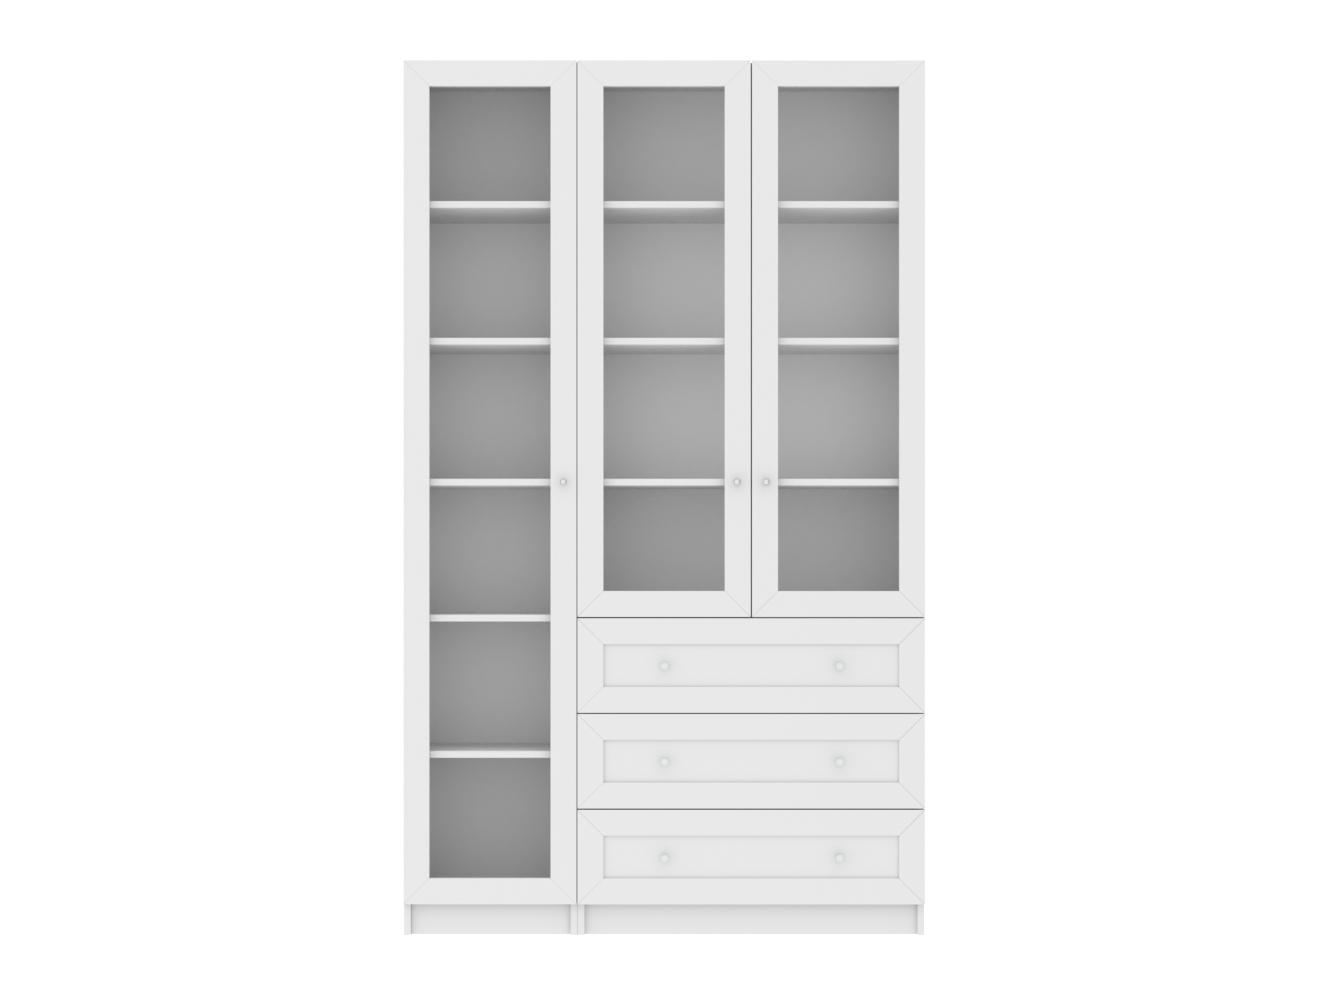 Книжный шкаф Билли 359 white ИКЕА (IKEA) изображение товара